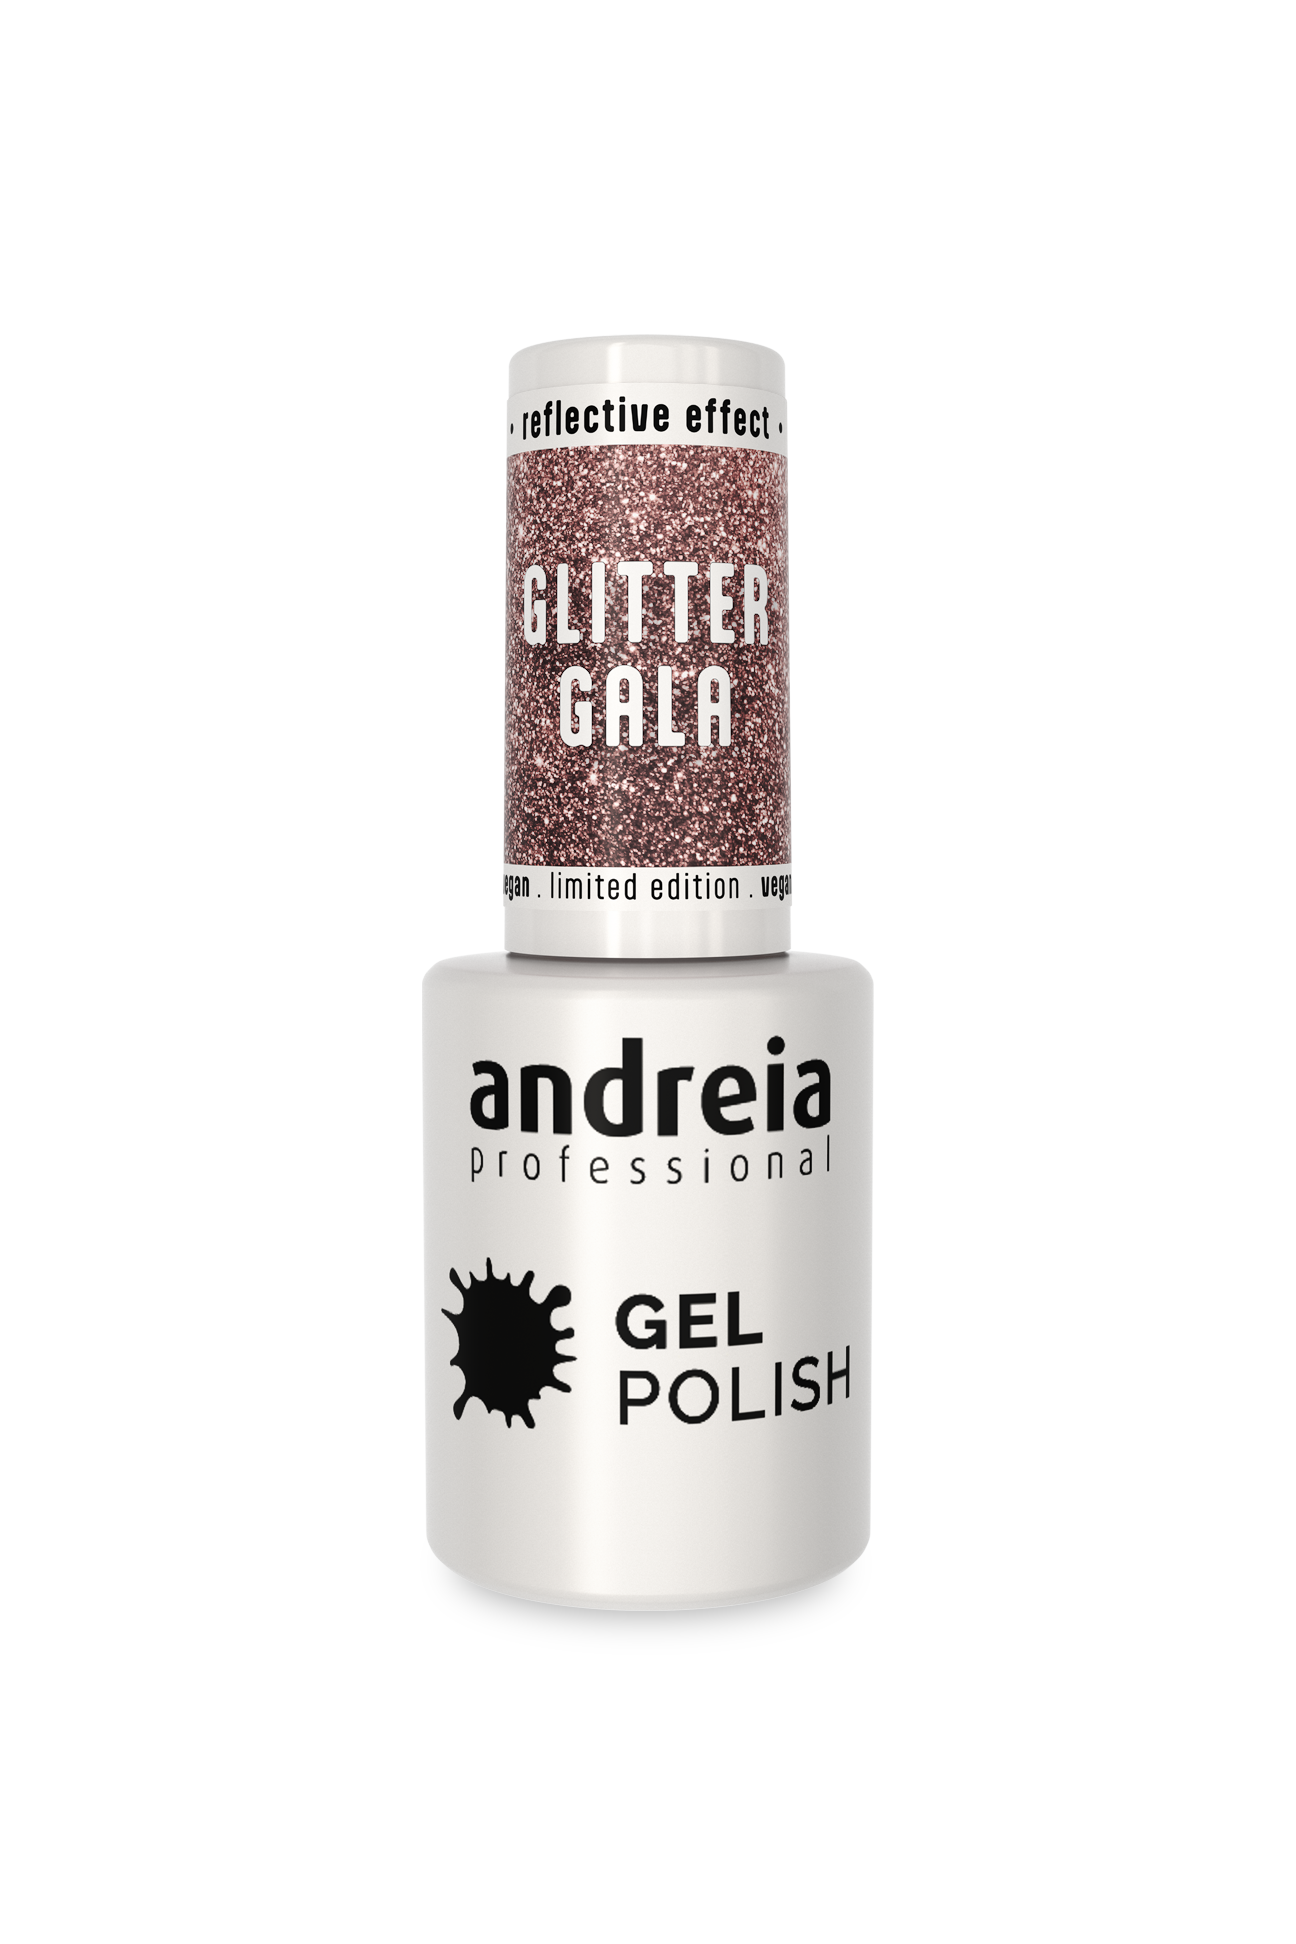 Glitter Gala GG2 - Limited Edition